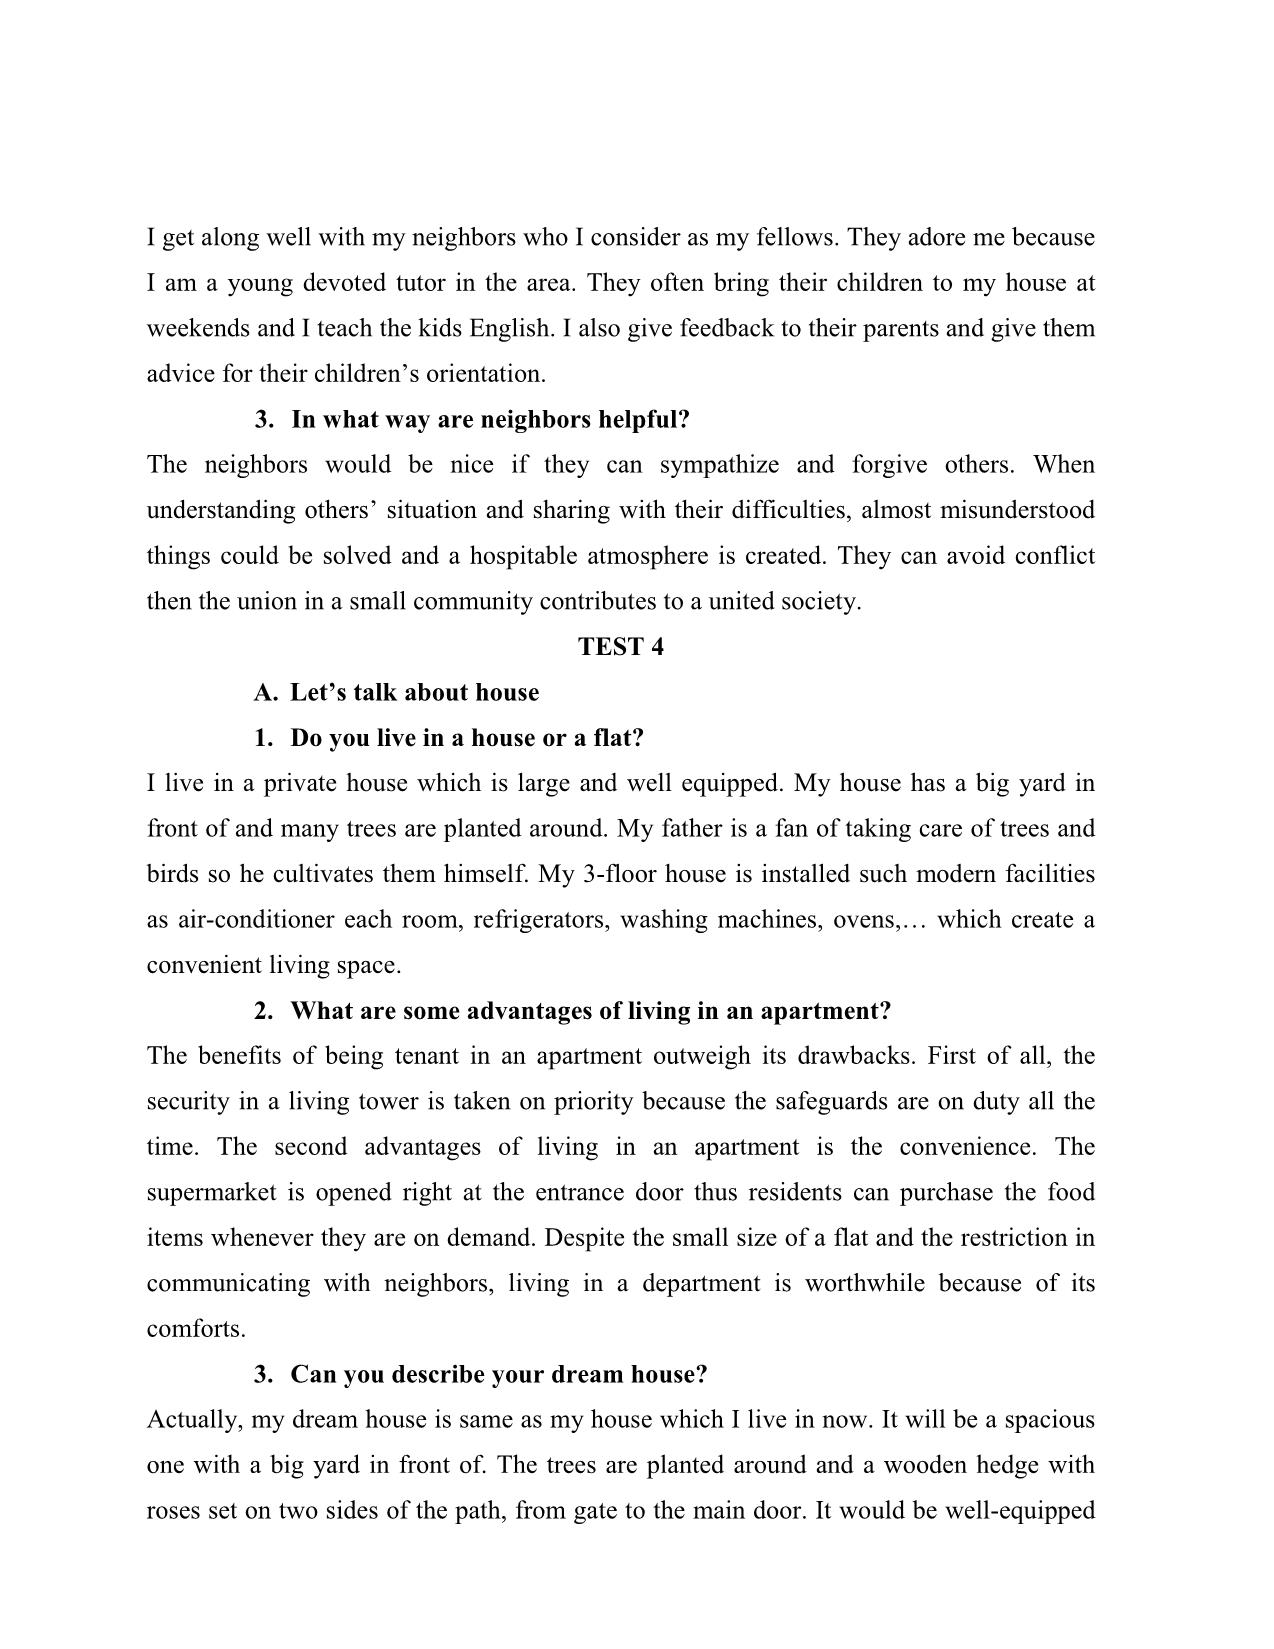 Tiếng Anh - Vstep speaking part 1 trang 5